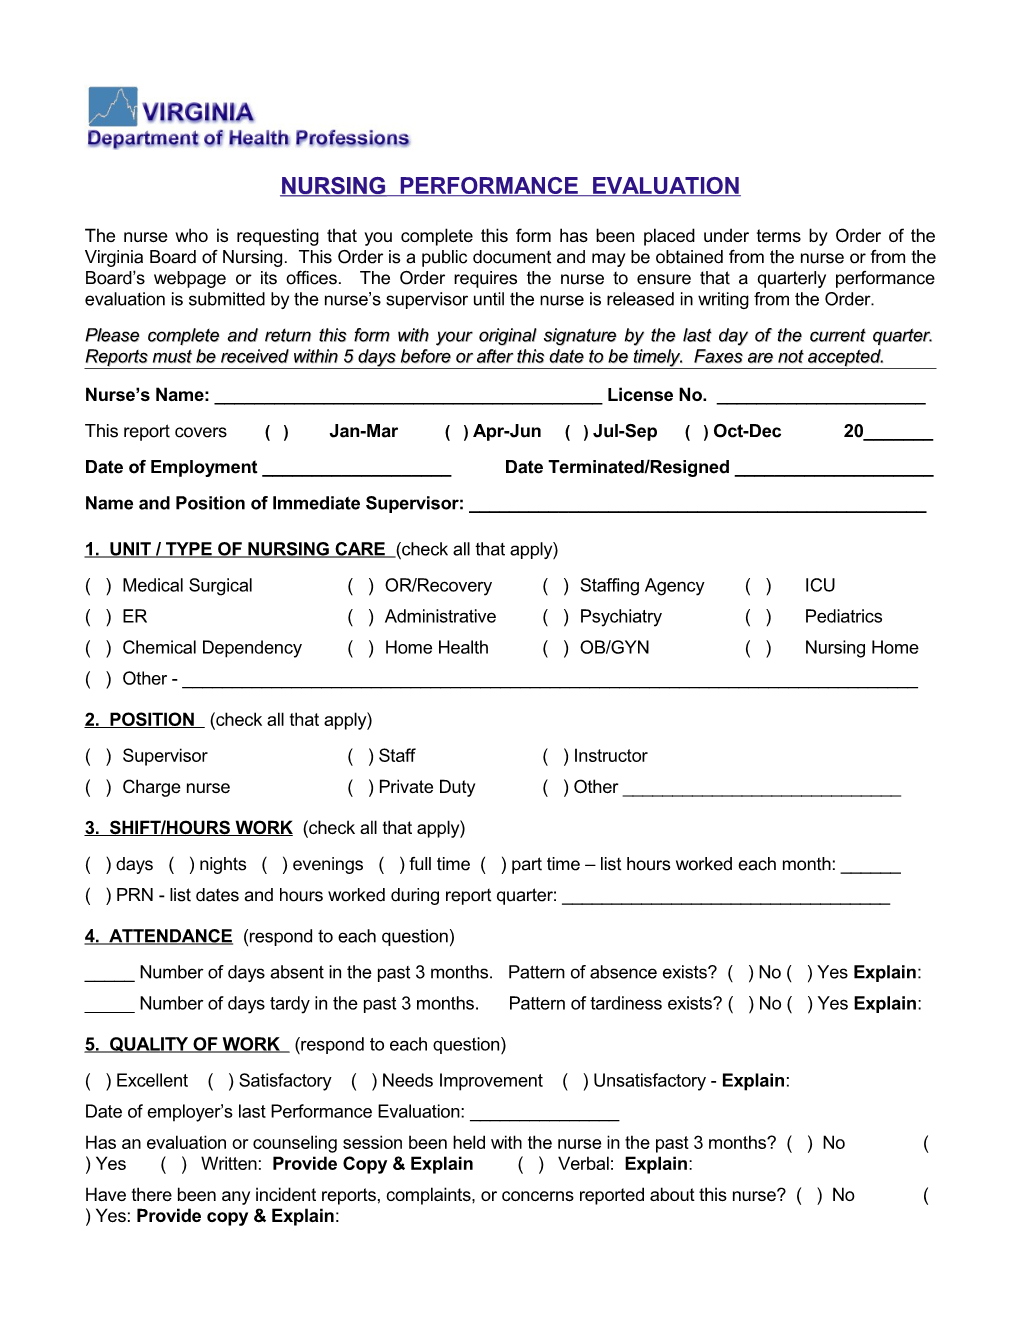 Nursing Performance Evaluation